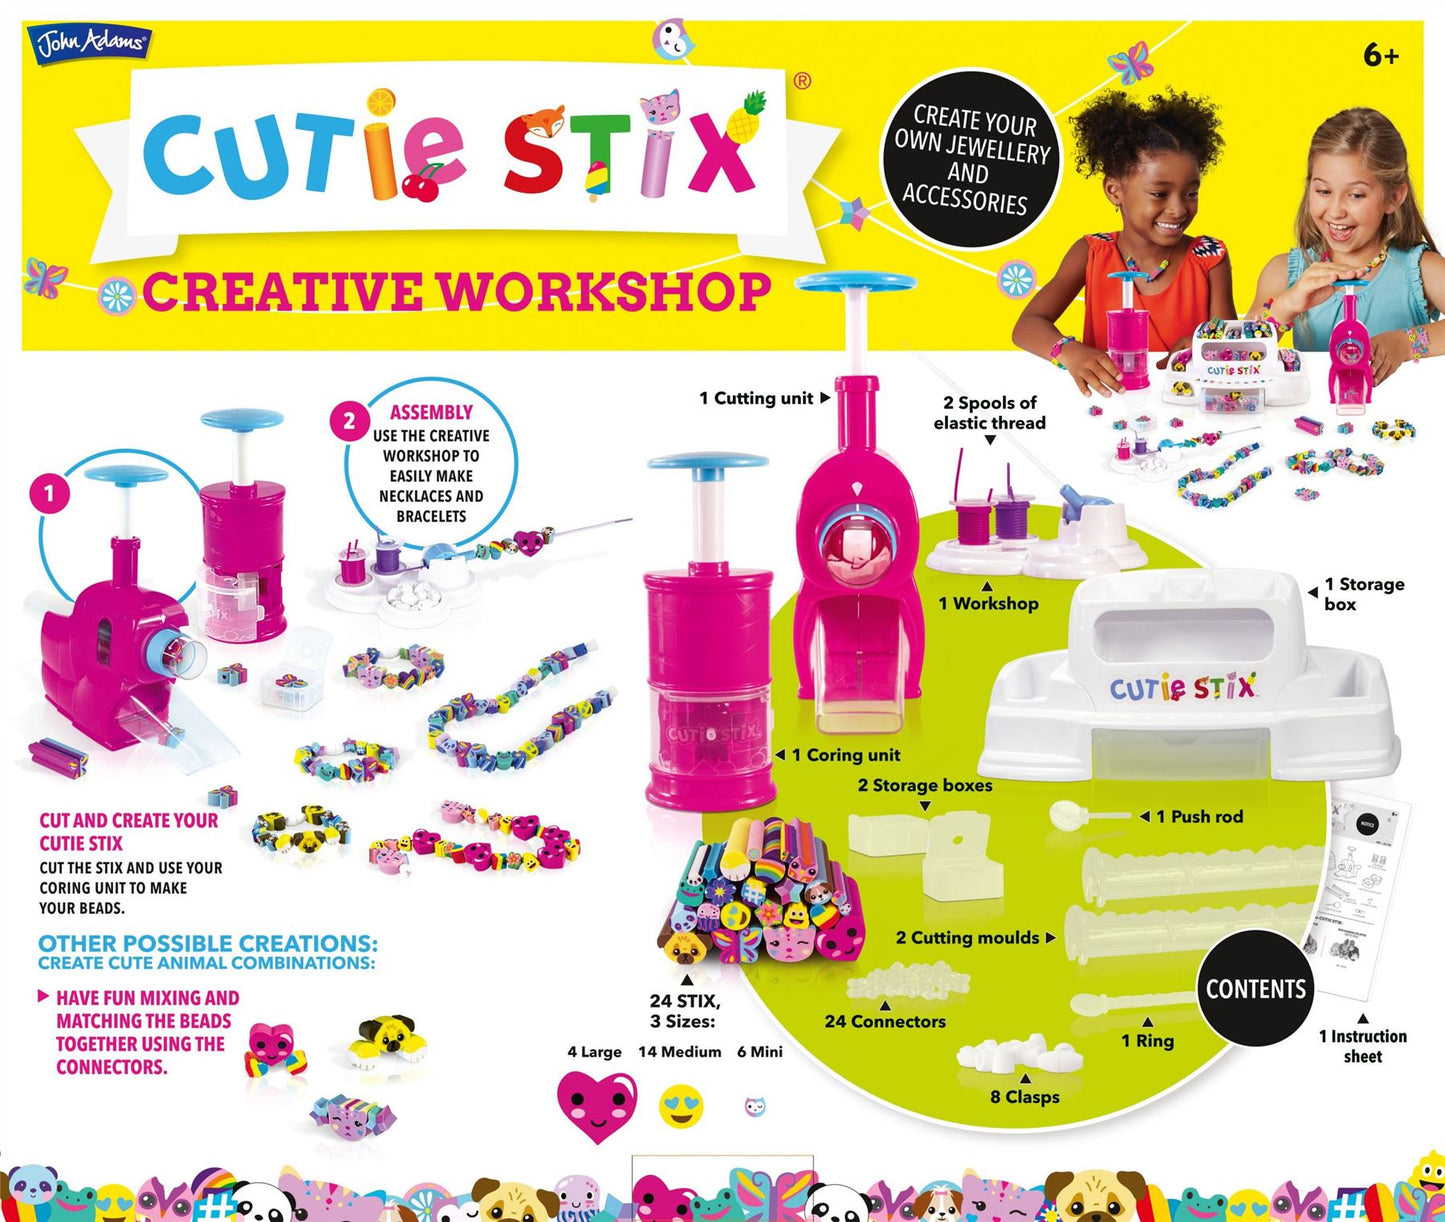 Cutie Stix Creative Workshop